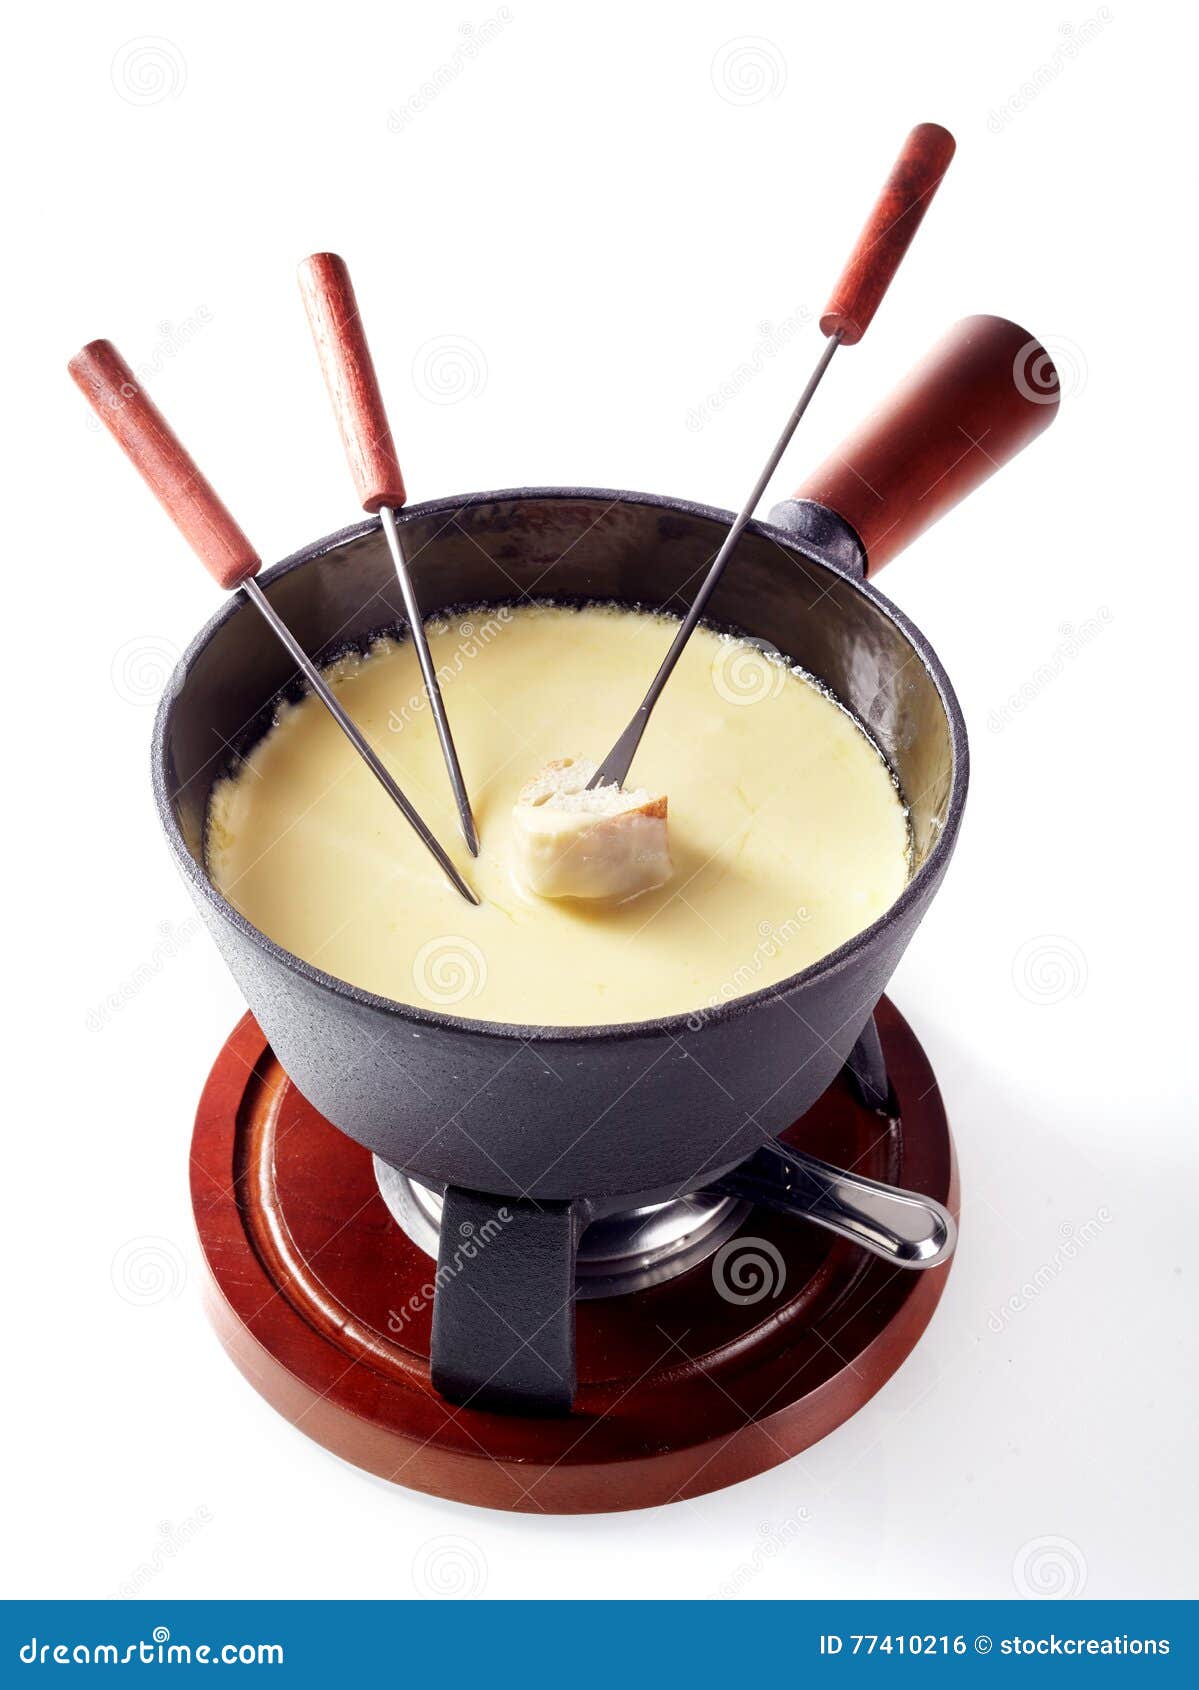 traditional swiss cheese and wine fondue